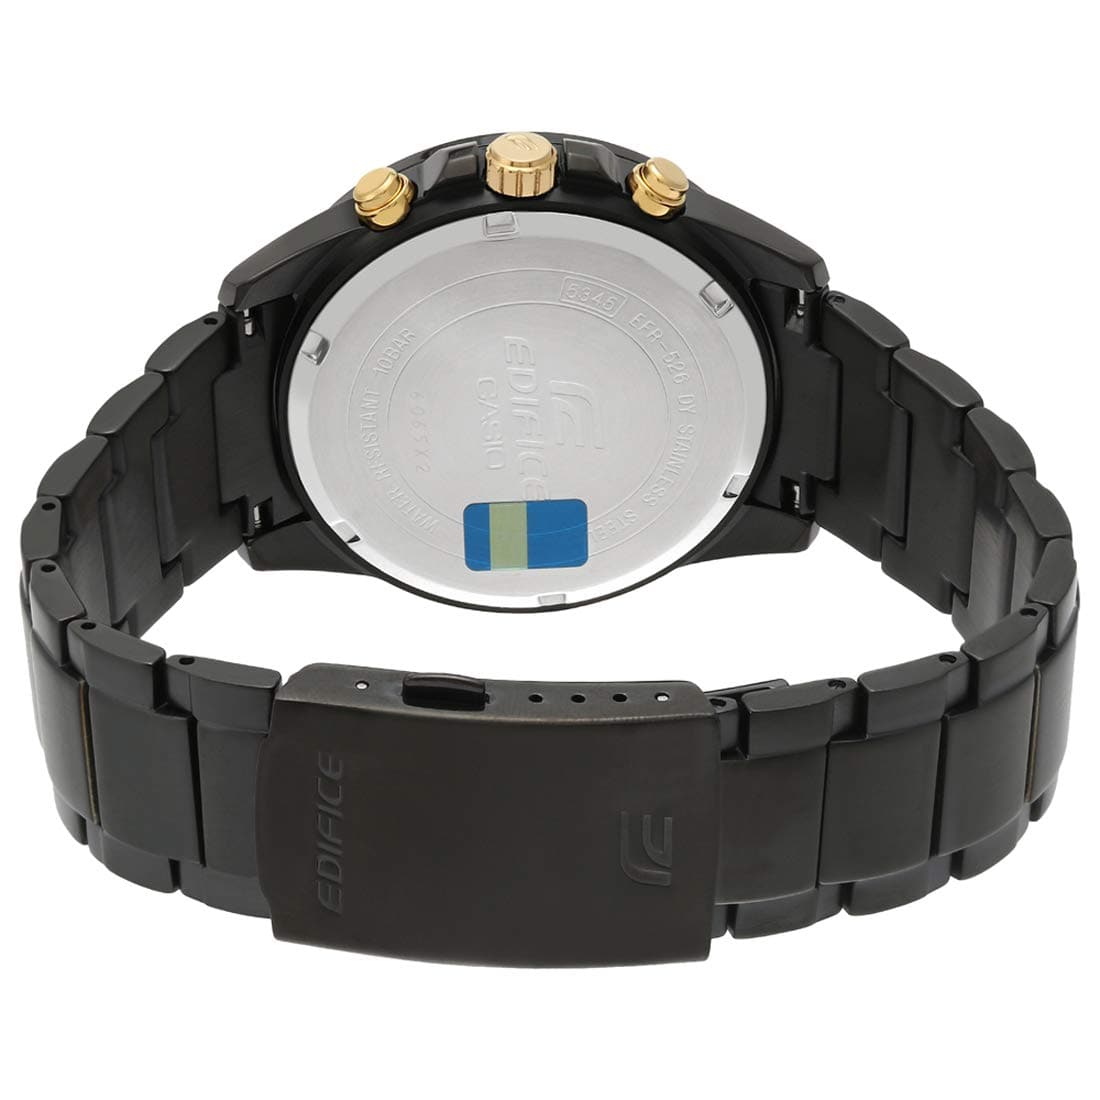 EDIFICE EFR-526BK-1A9VUDF - EX208 Black Chronograph - Men's Watch - Kamal Watch Company